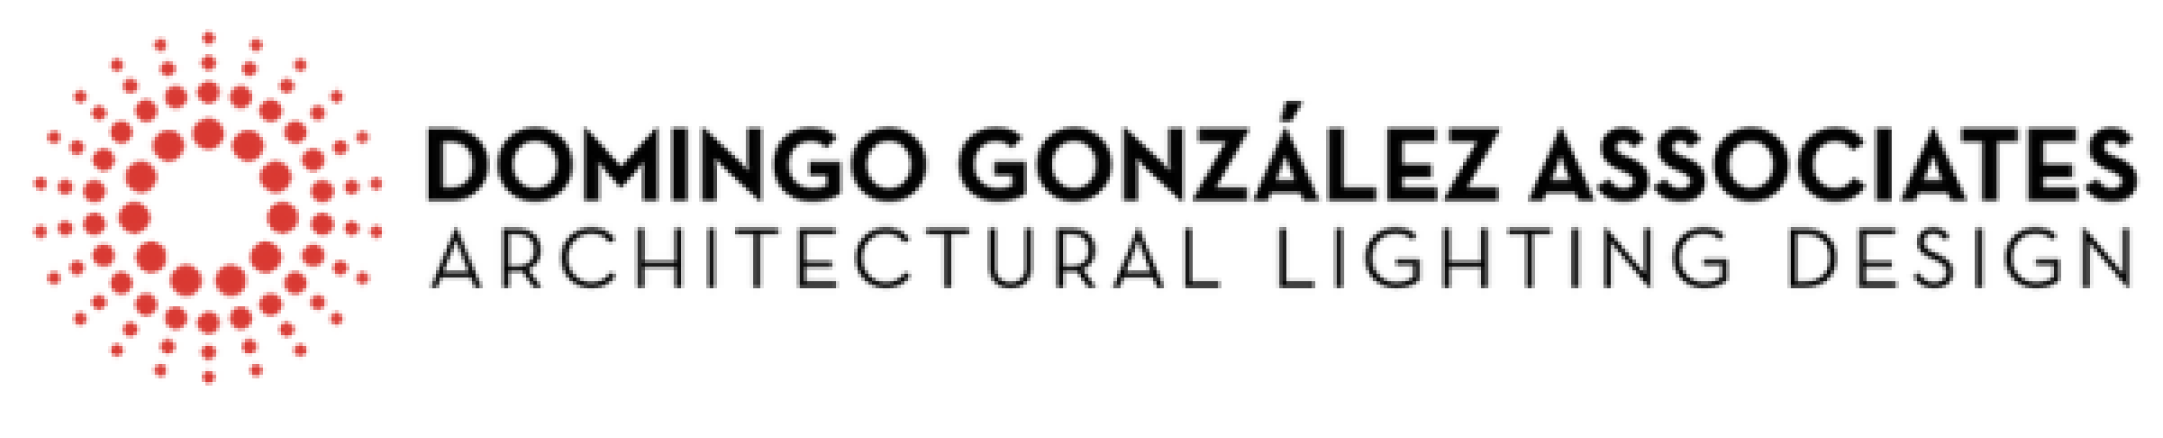 Domingo Gonzalez Associates logo